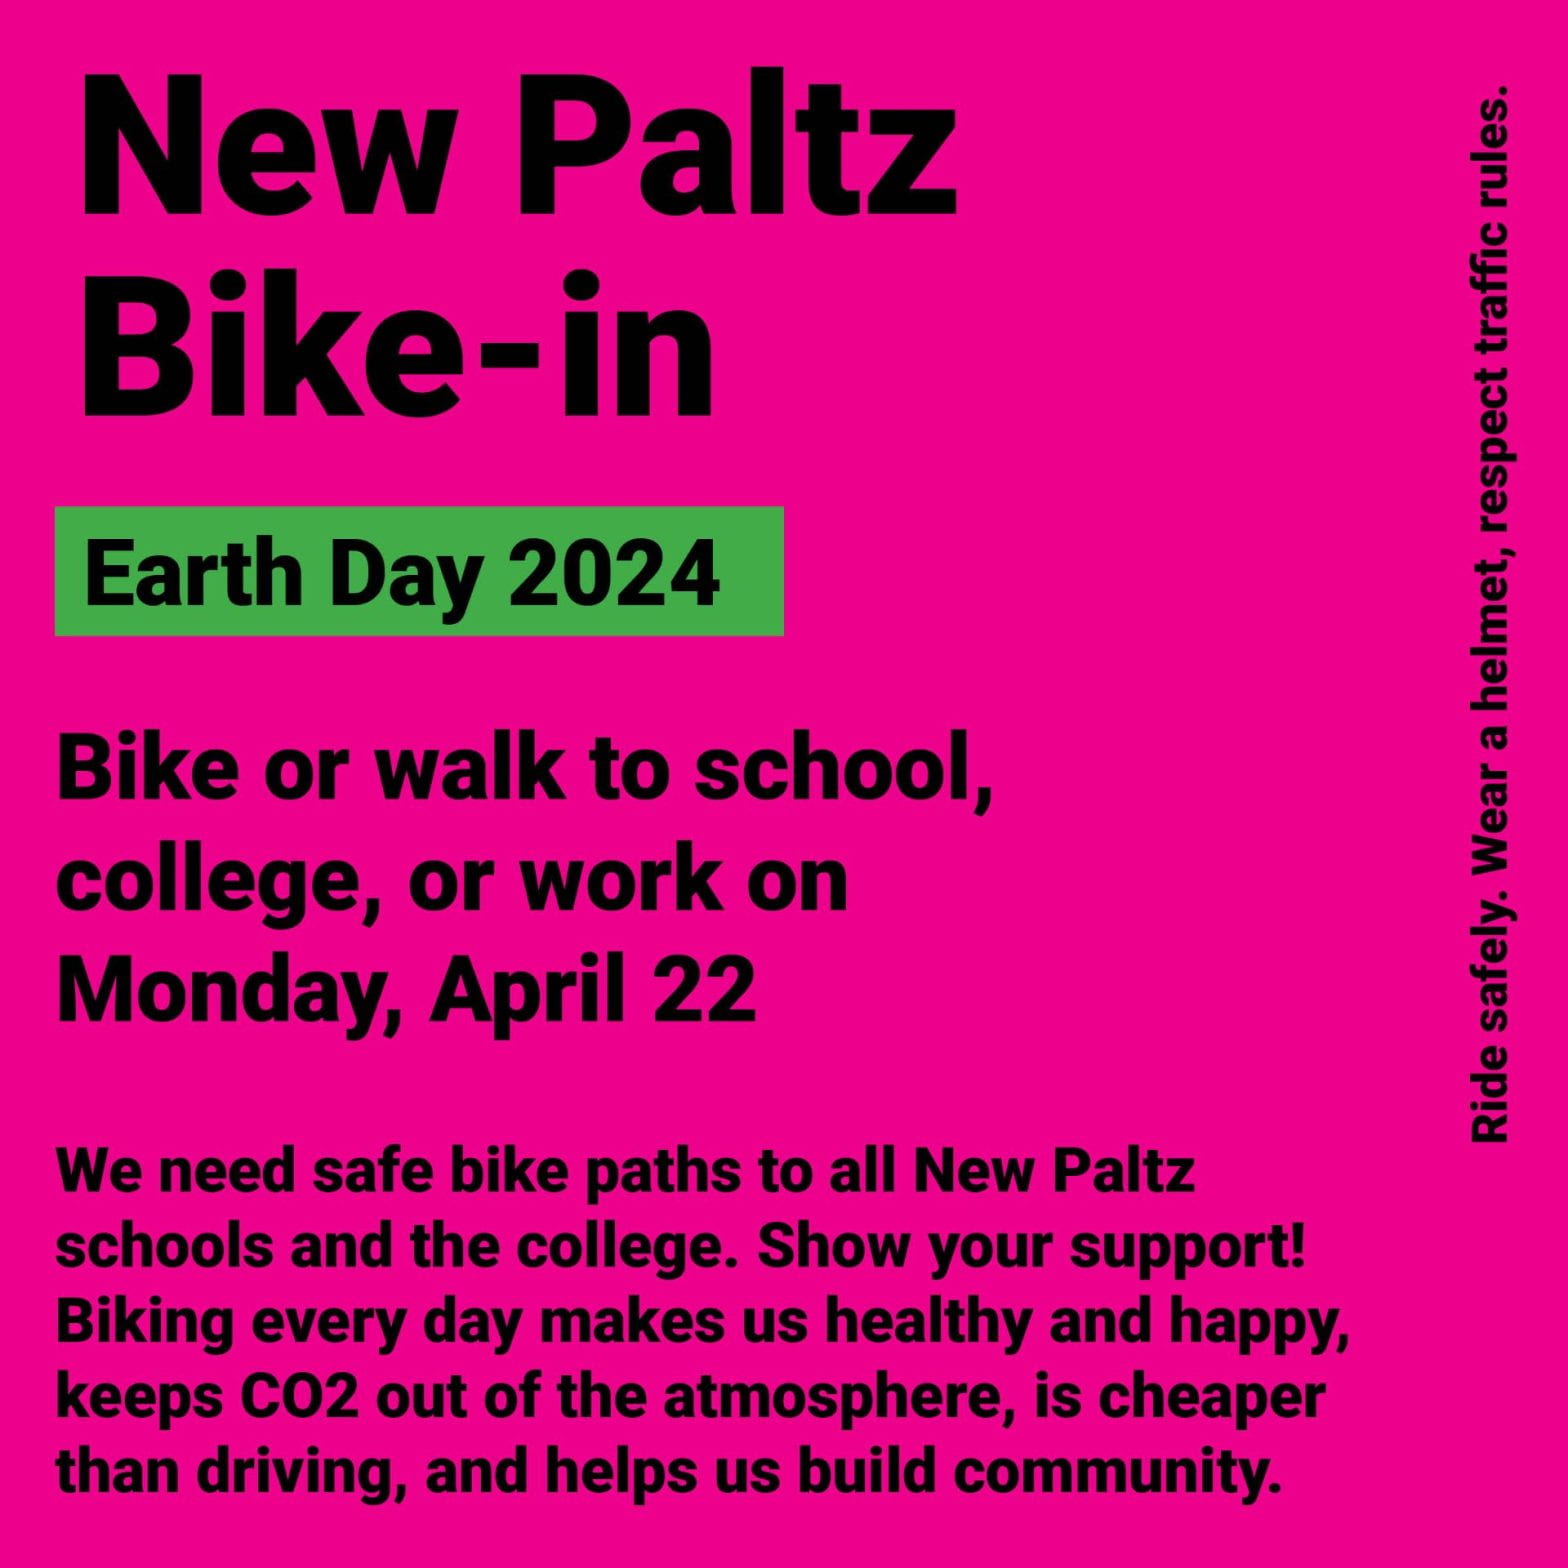 New Paltz Bike-in on Earth Day